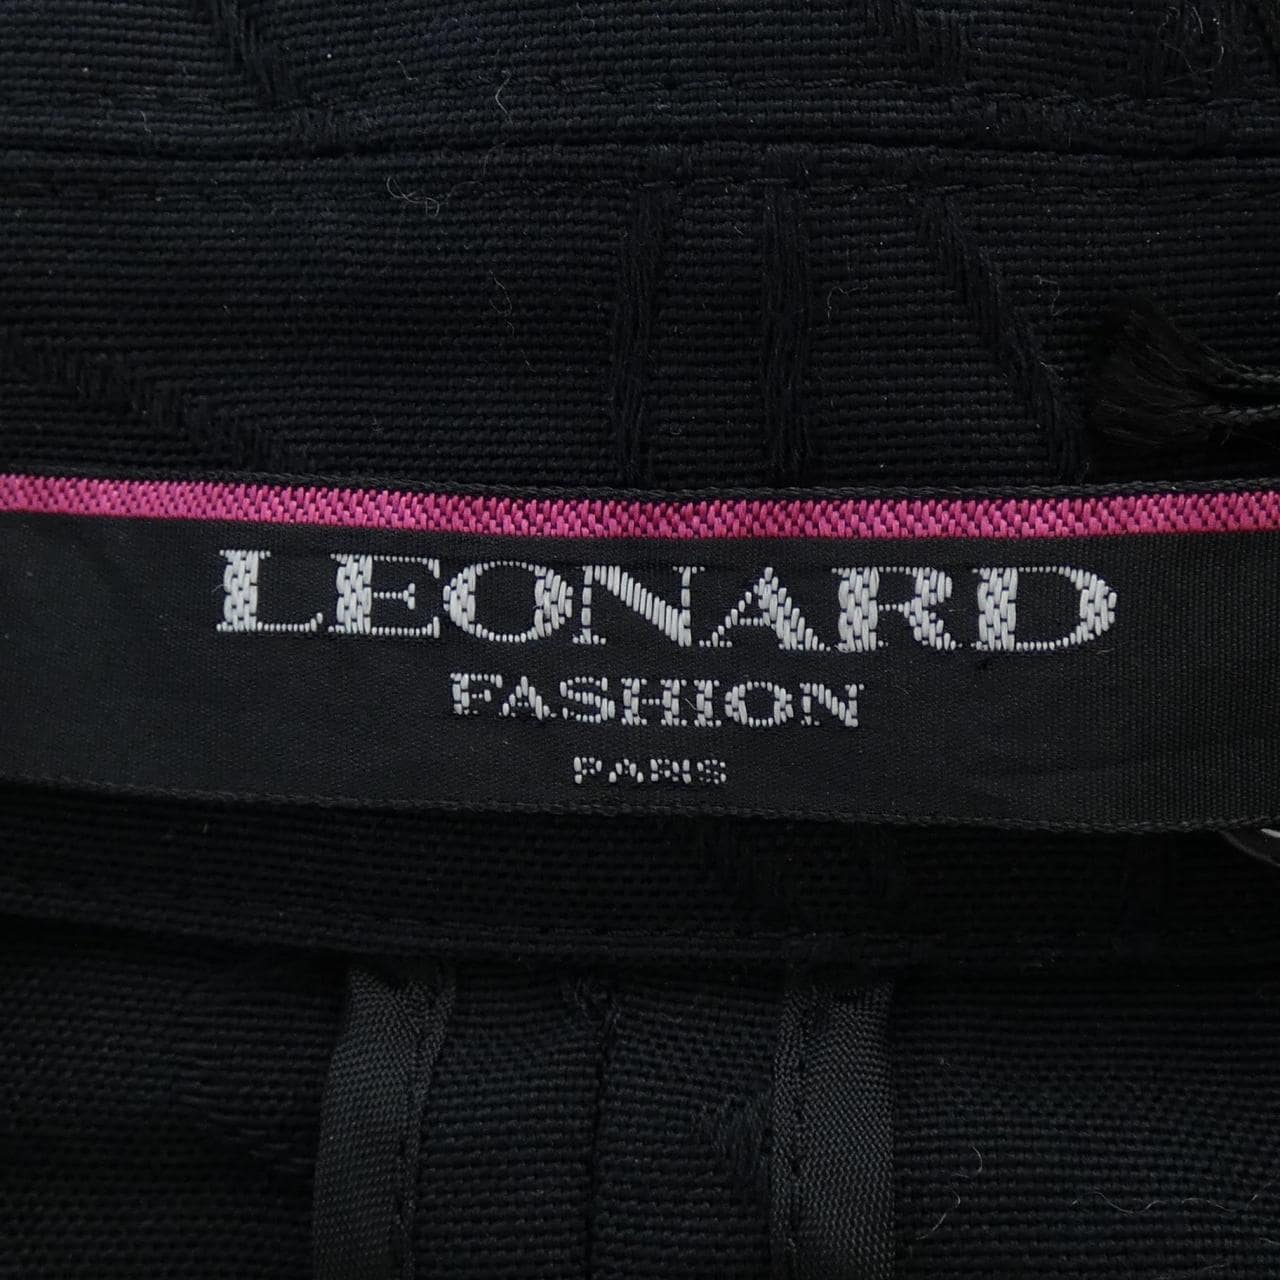 莱昂纳多时尚LEONARD FASHION夹克